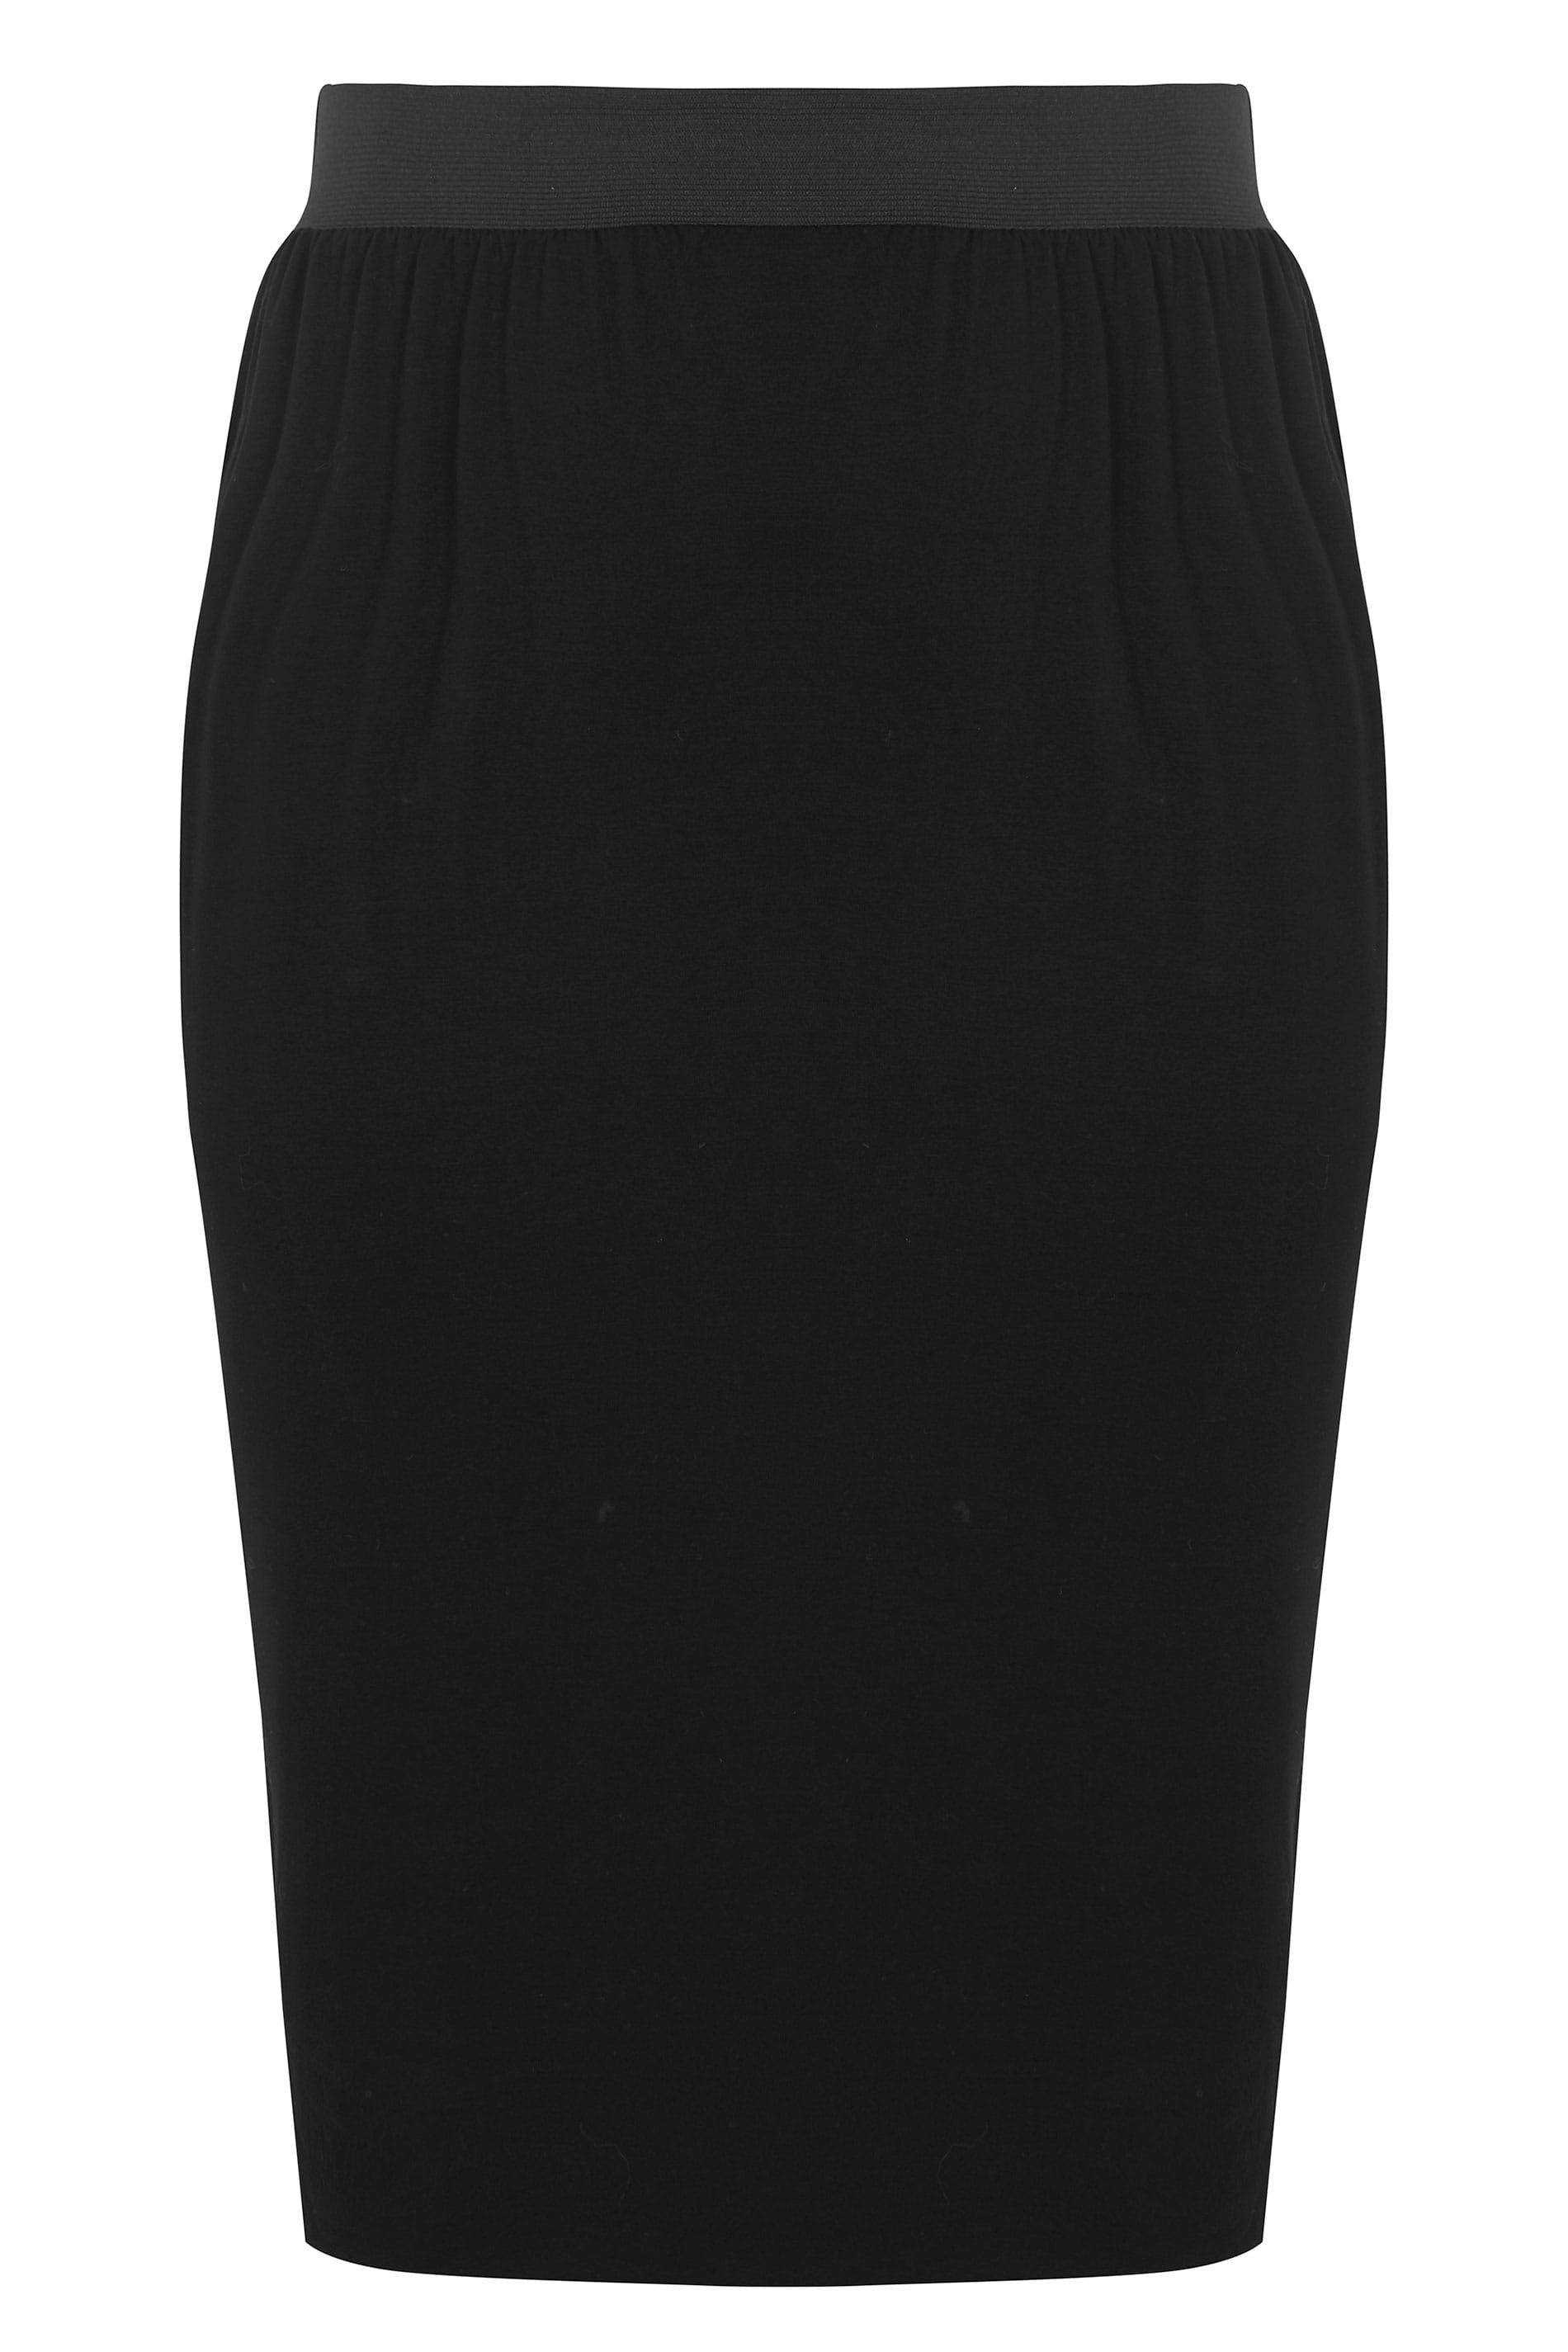 Black Pencil Skirt Plus Size 16 To 36